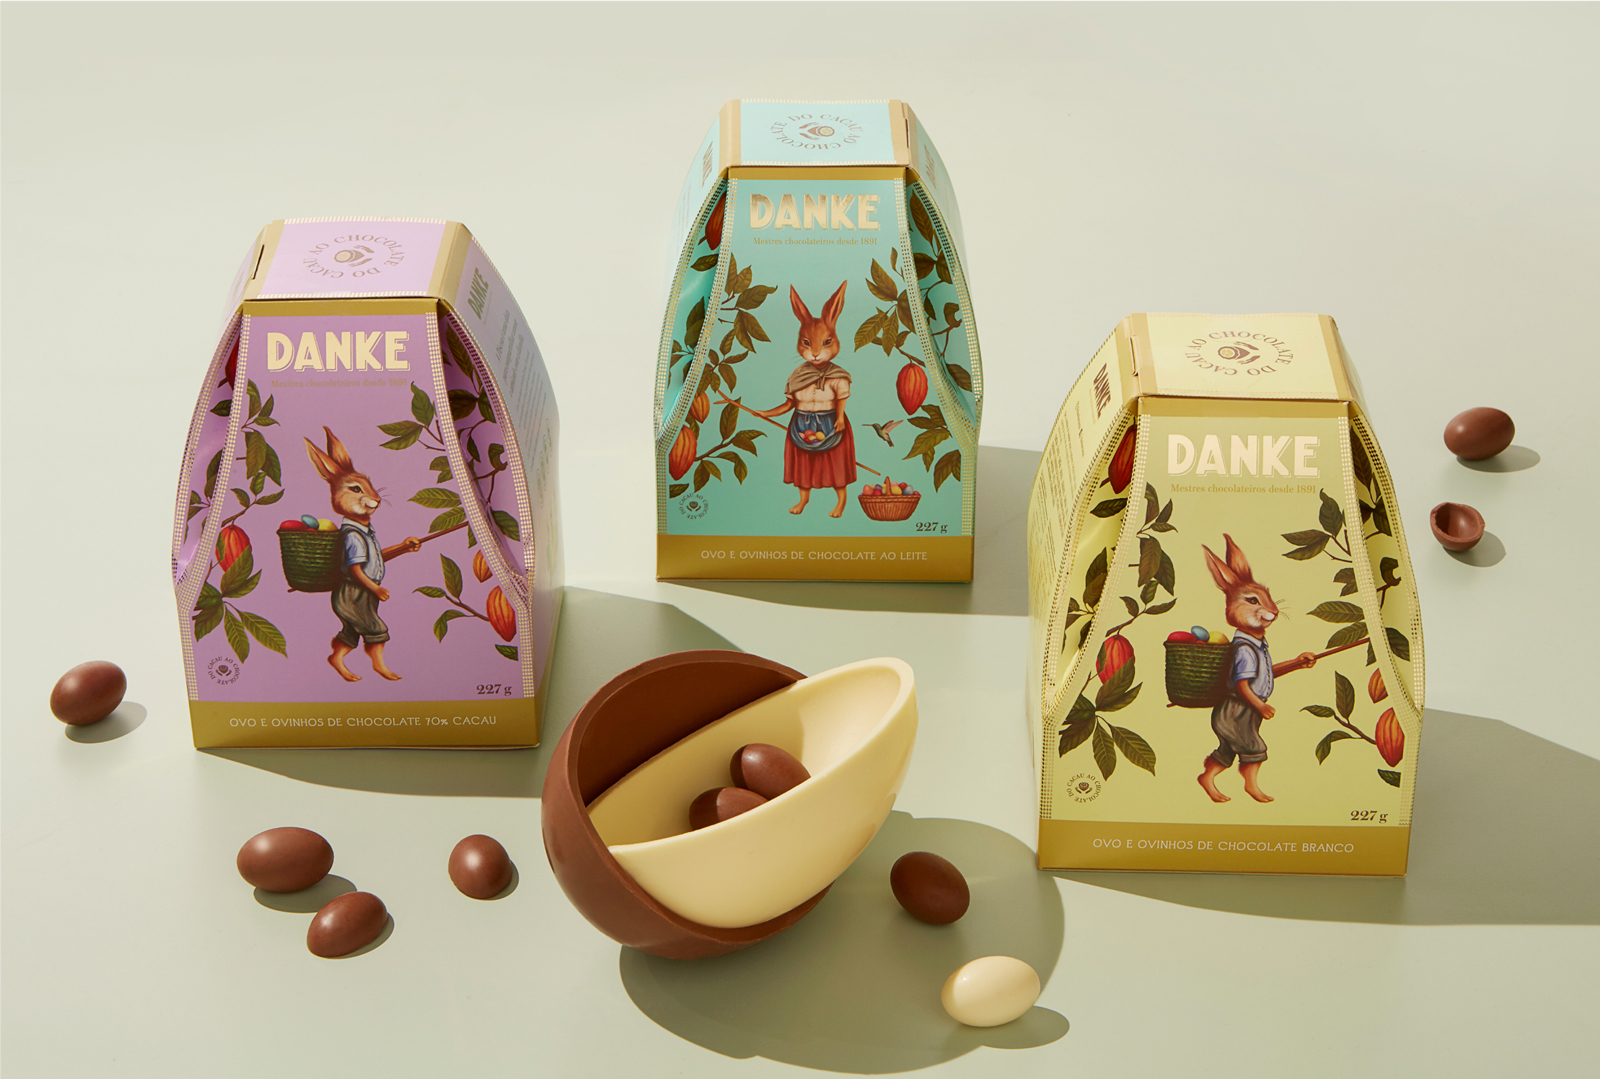 Danke巧克力产品插画风格包装设计欣赏(图2)